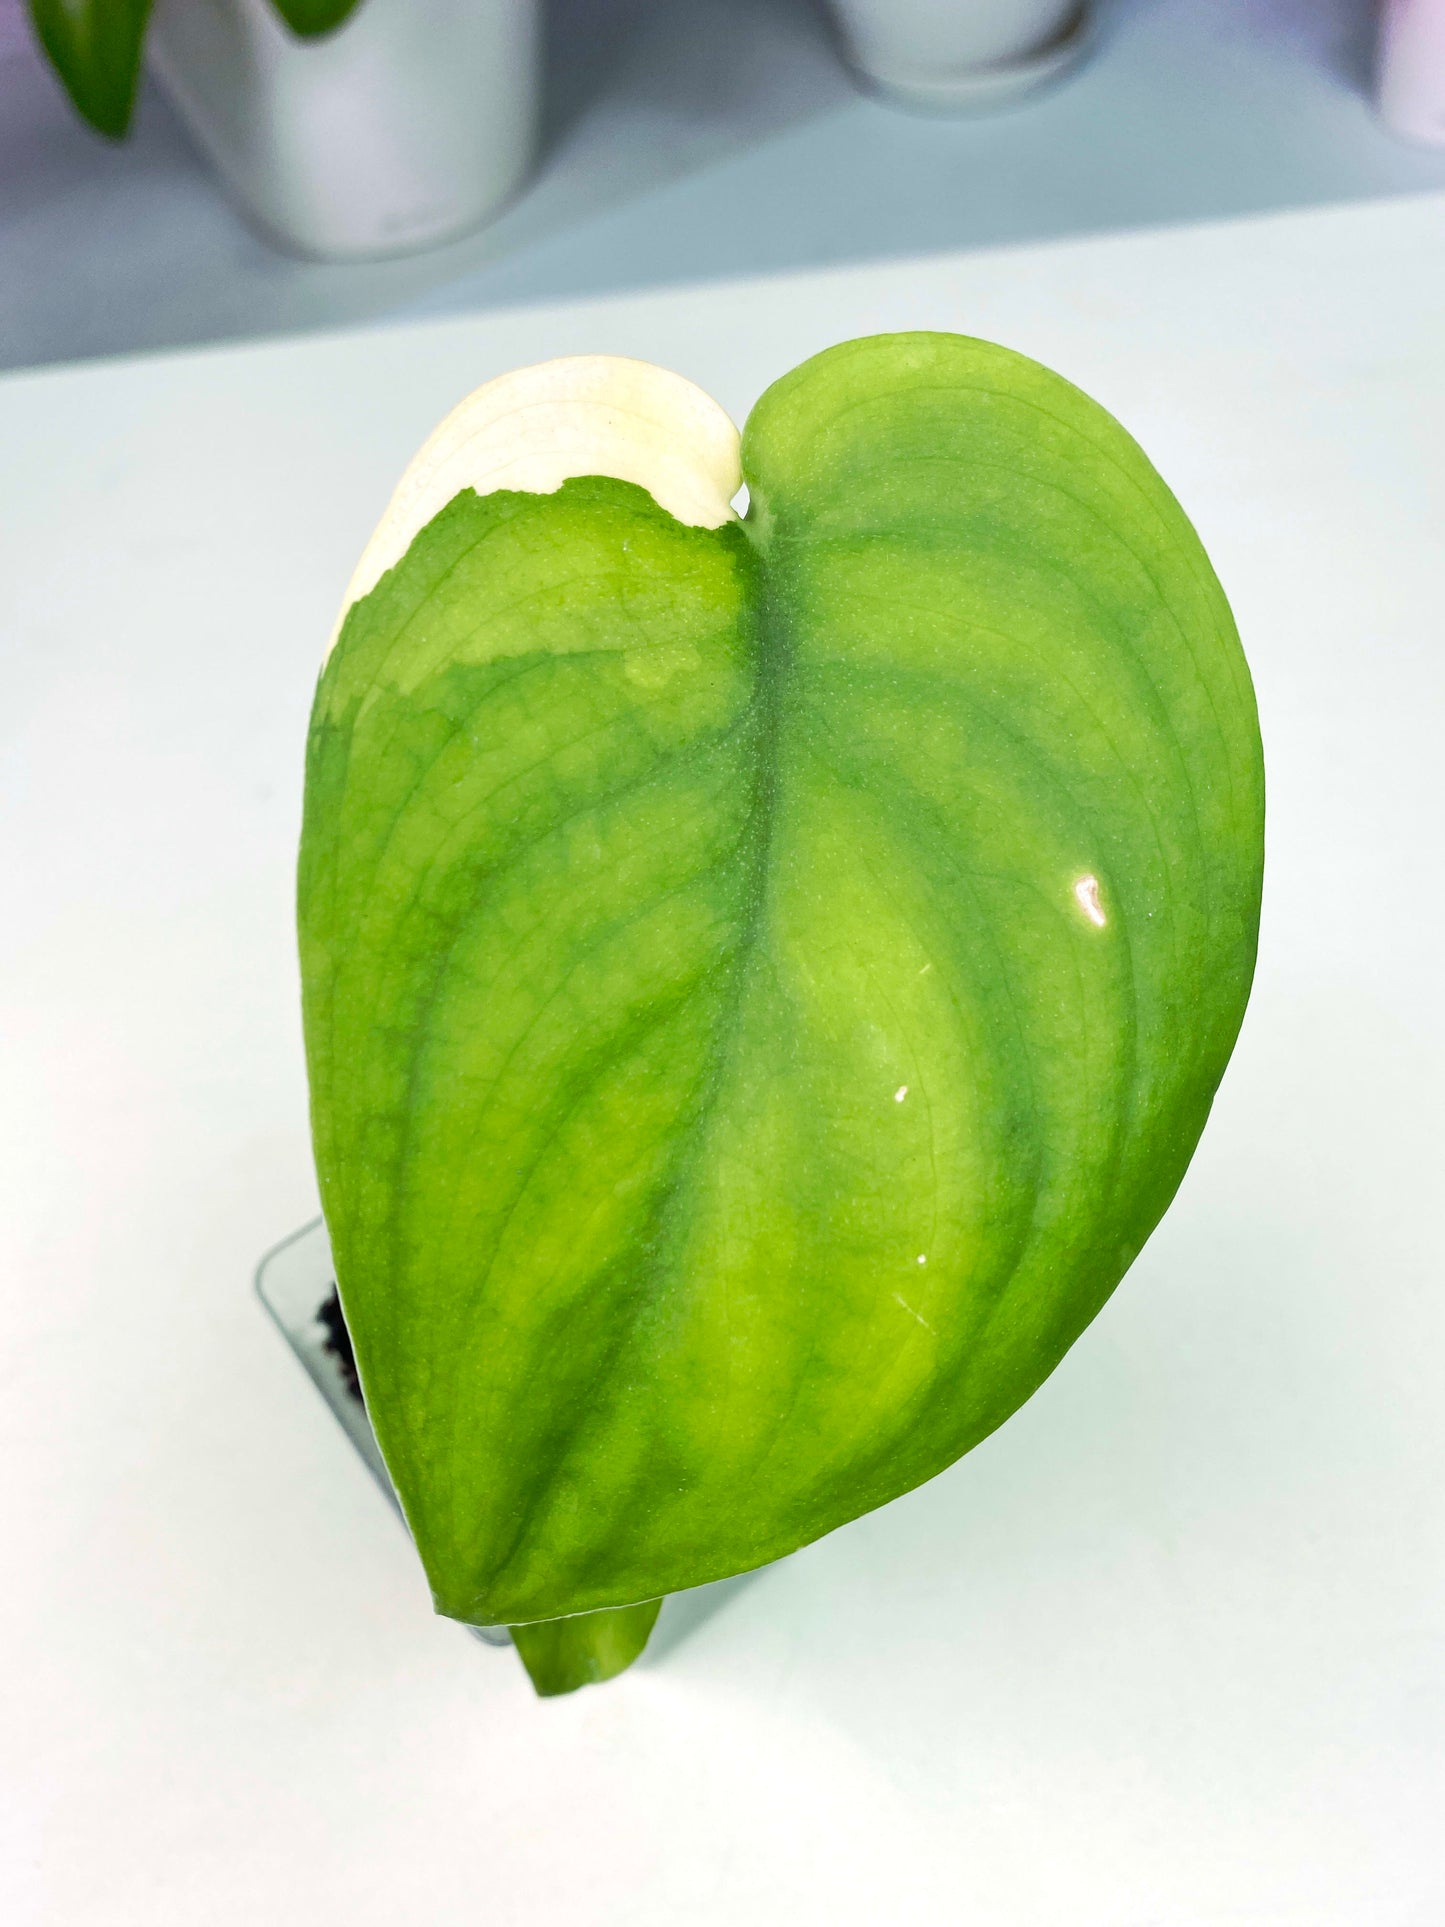 Scindapsus pictus "Jade Satin" albo (3:Y7) [1389] | Exact Plant